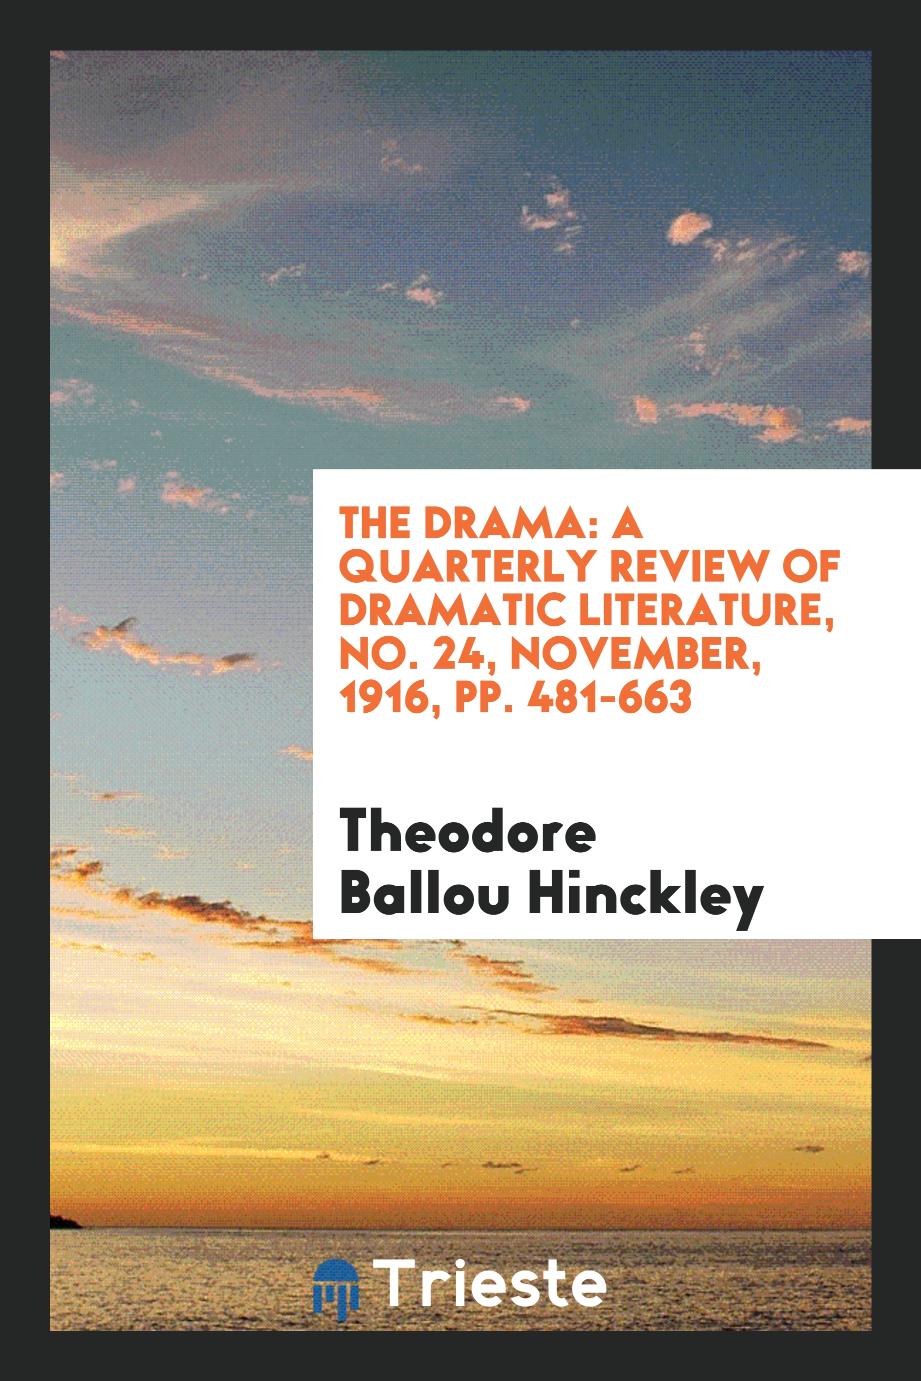 The Drama: A Quarterly Review of Dramatic Literature, No. 24, November, 1916, pp. 481-663